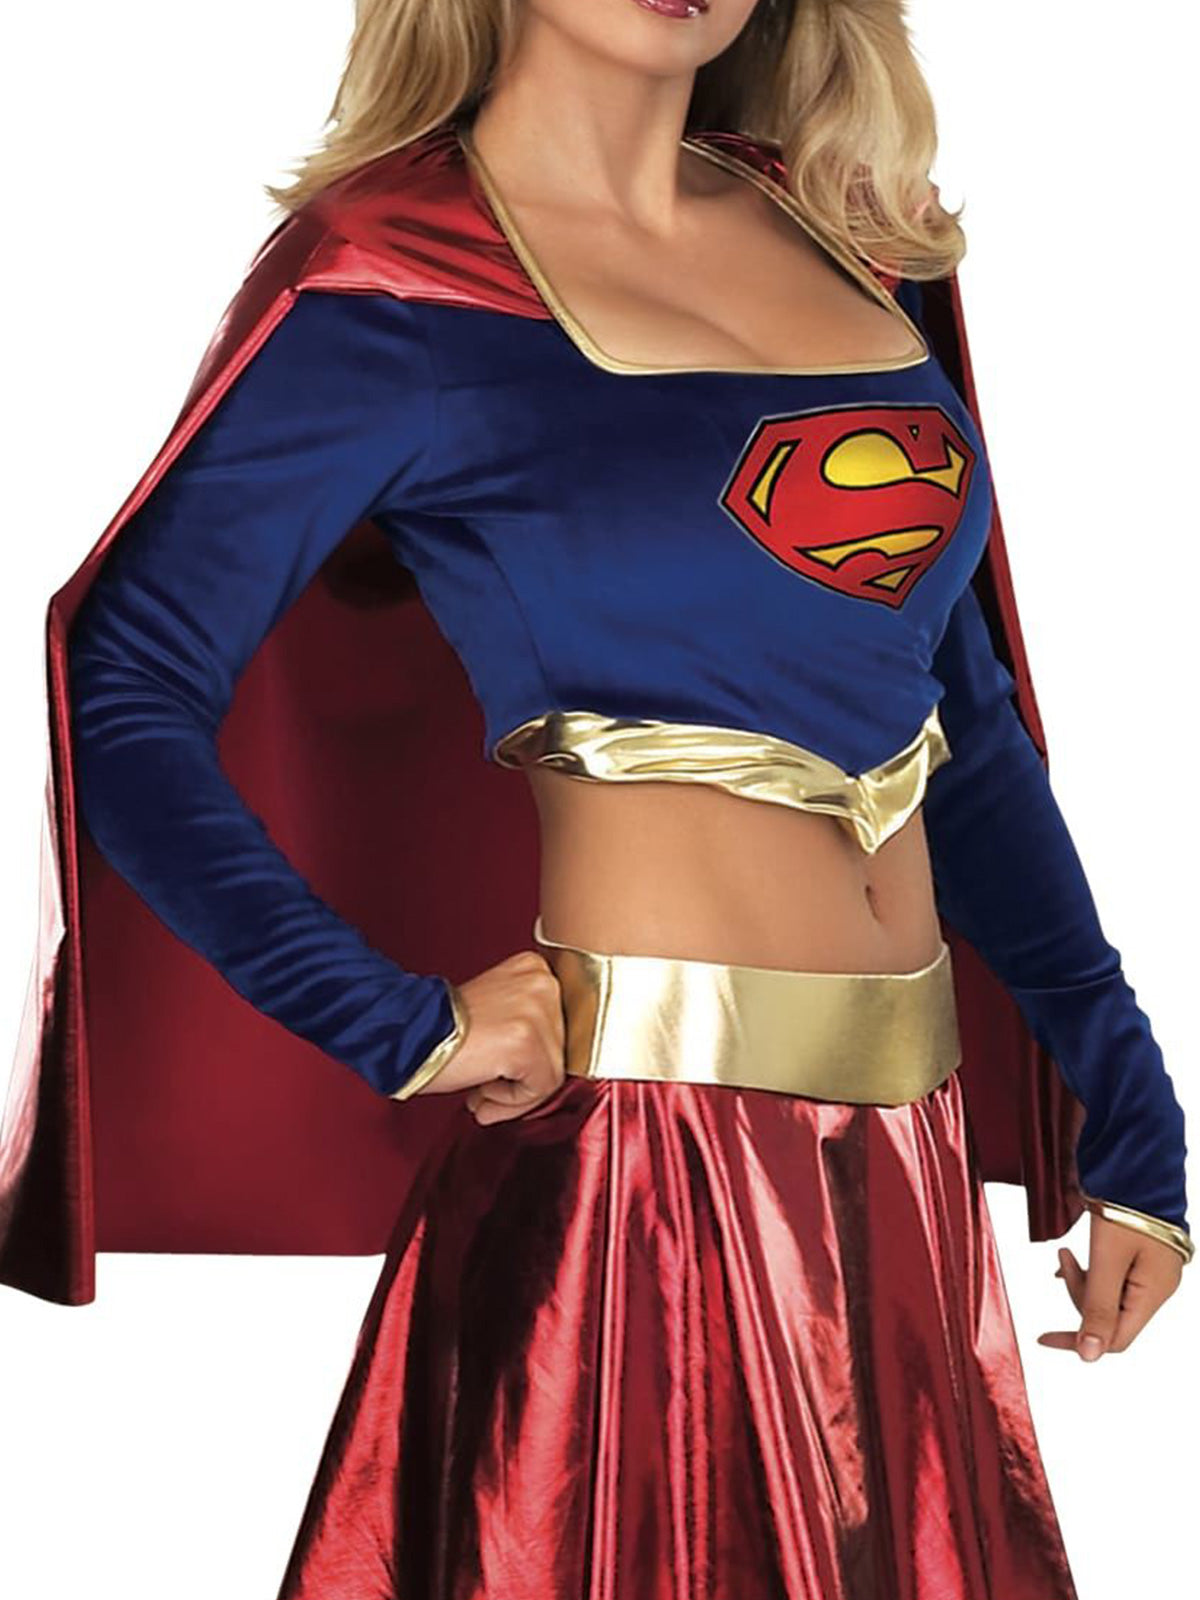 Sexy Supergirl Costume